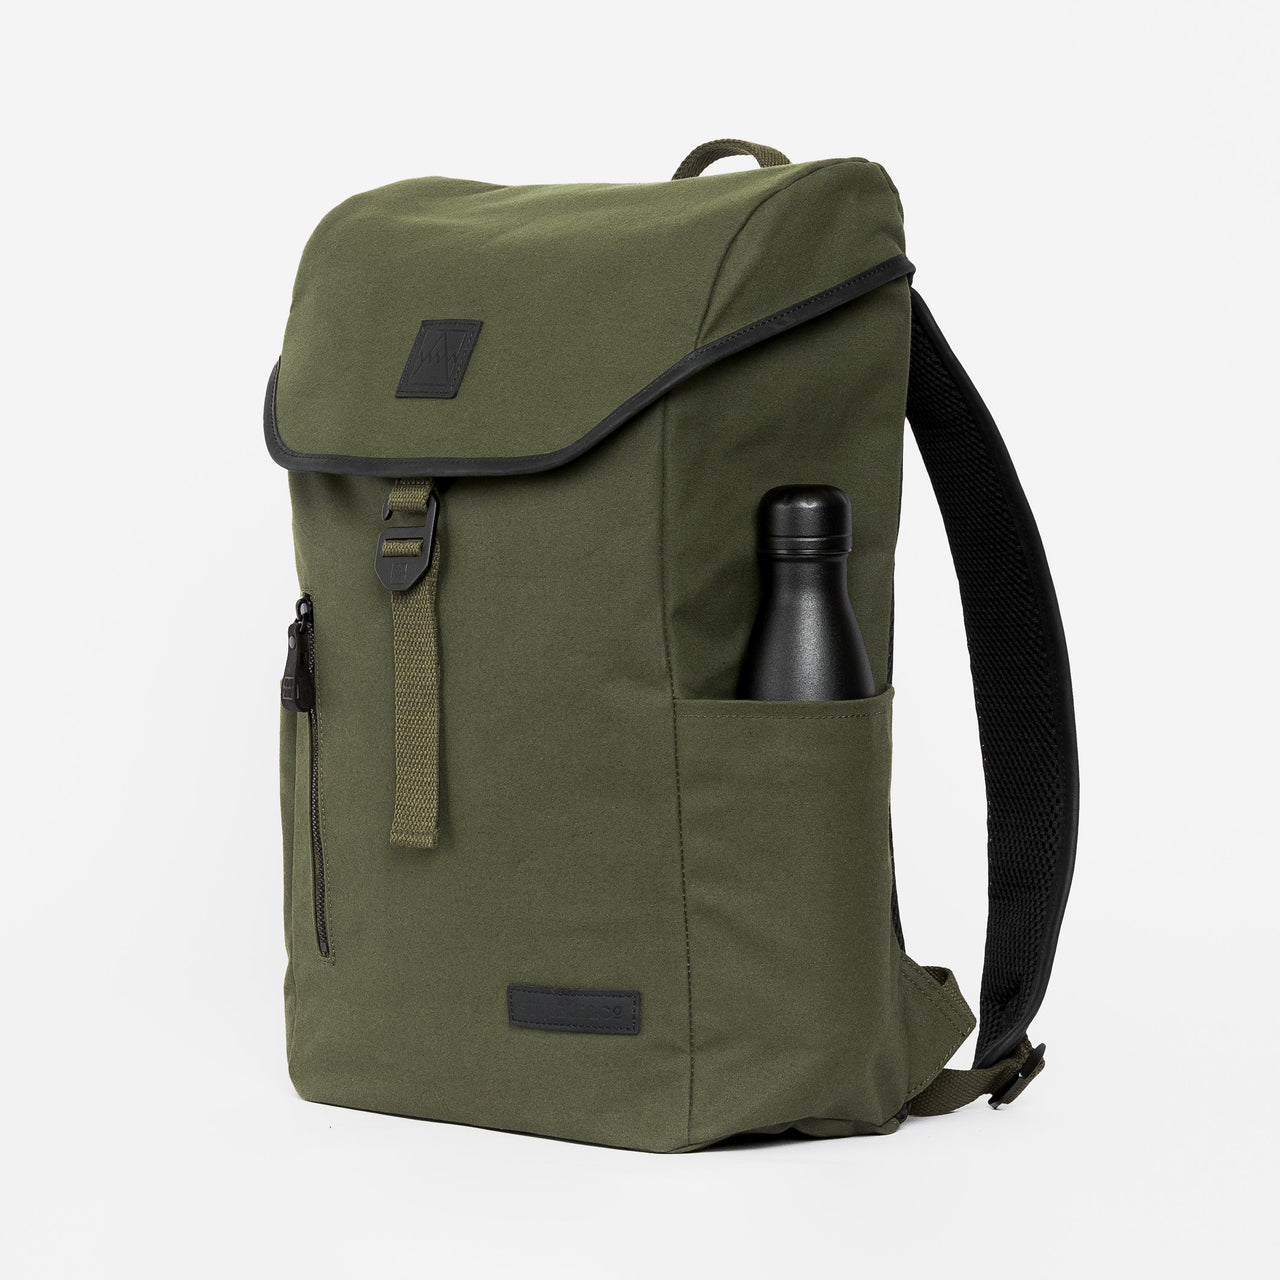 The Backpack in Olive green water bottle pocket